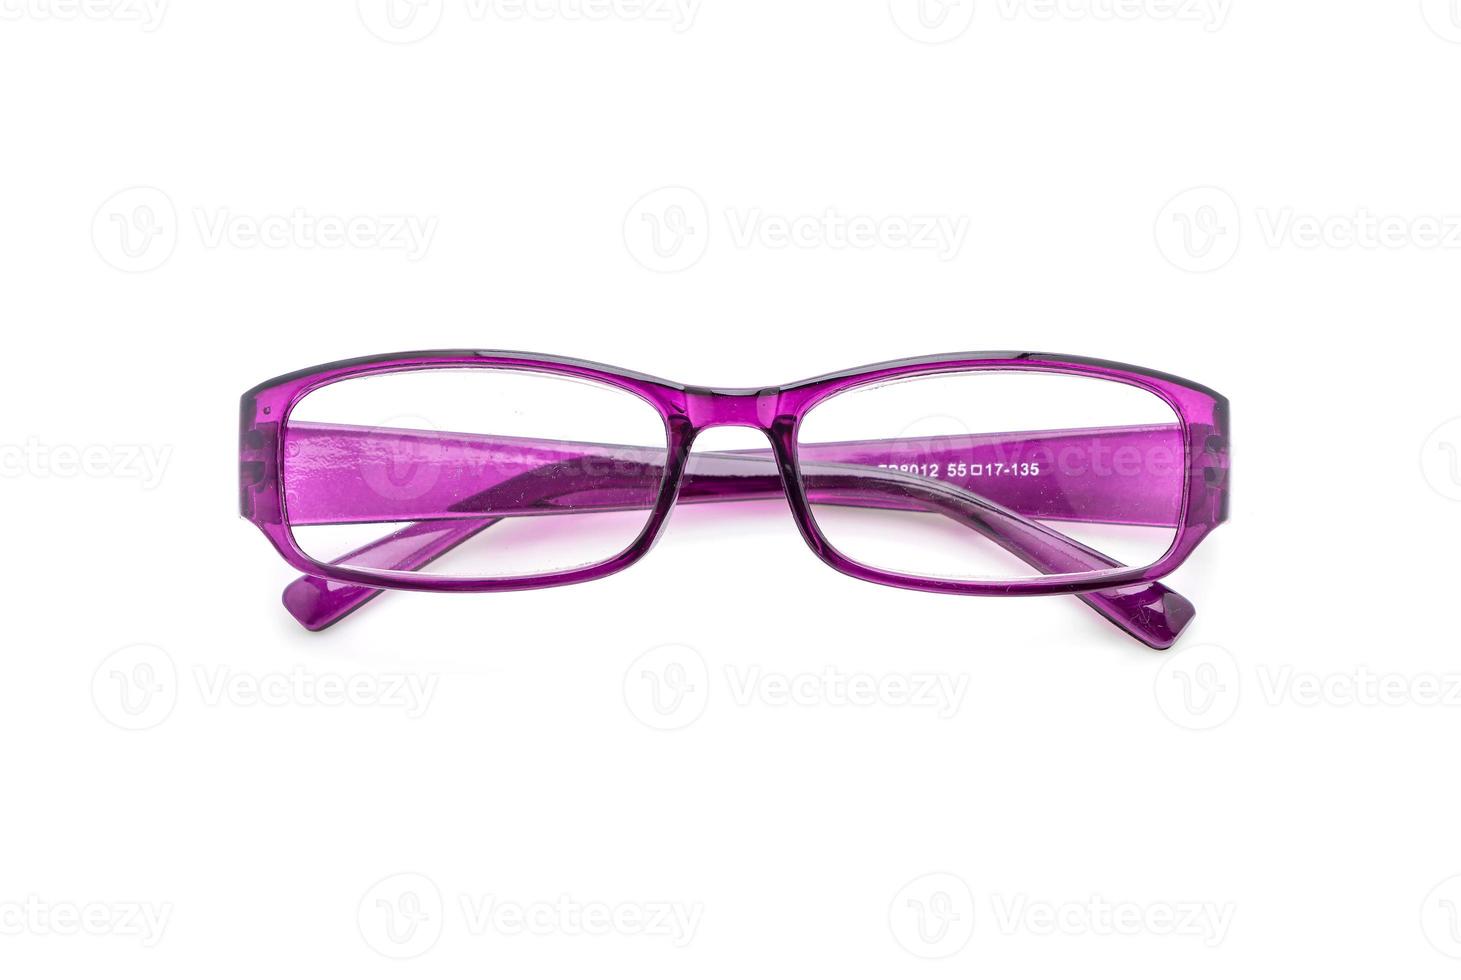 bril, bril of bril op een witte achtergrond foto